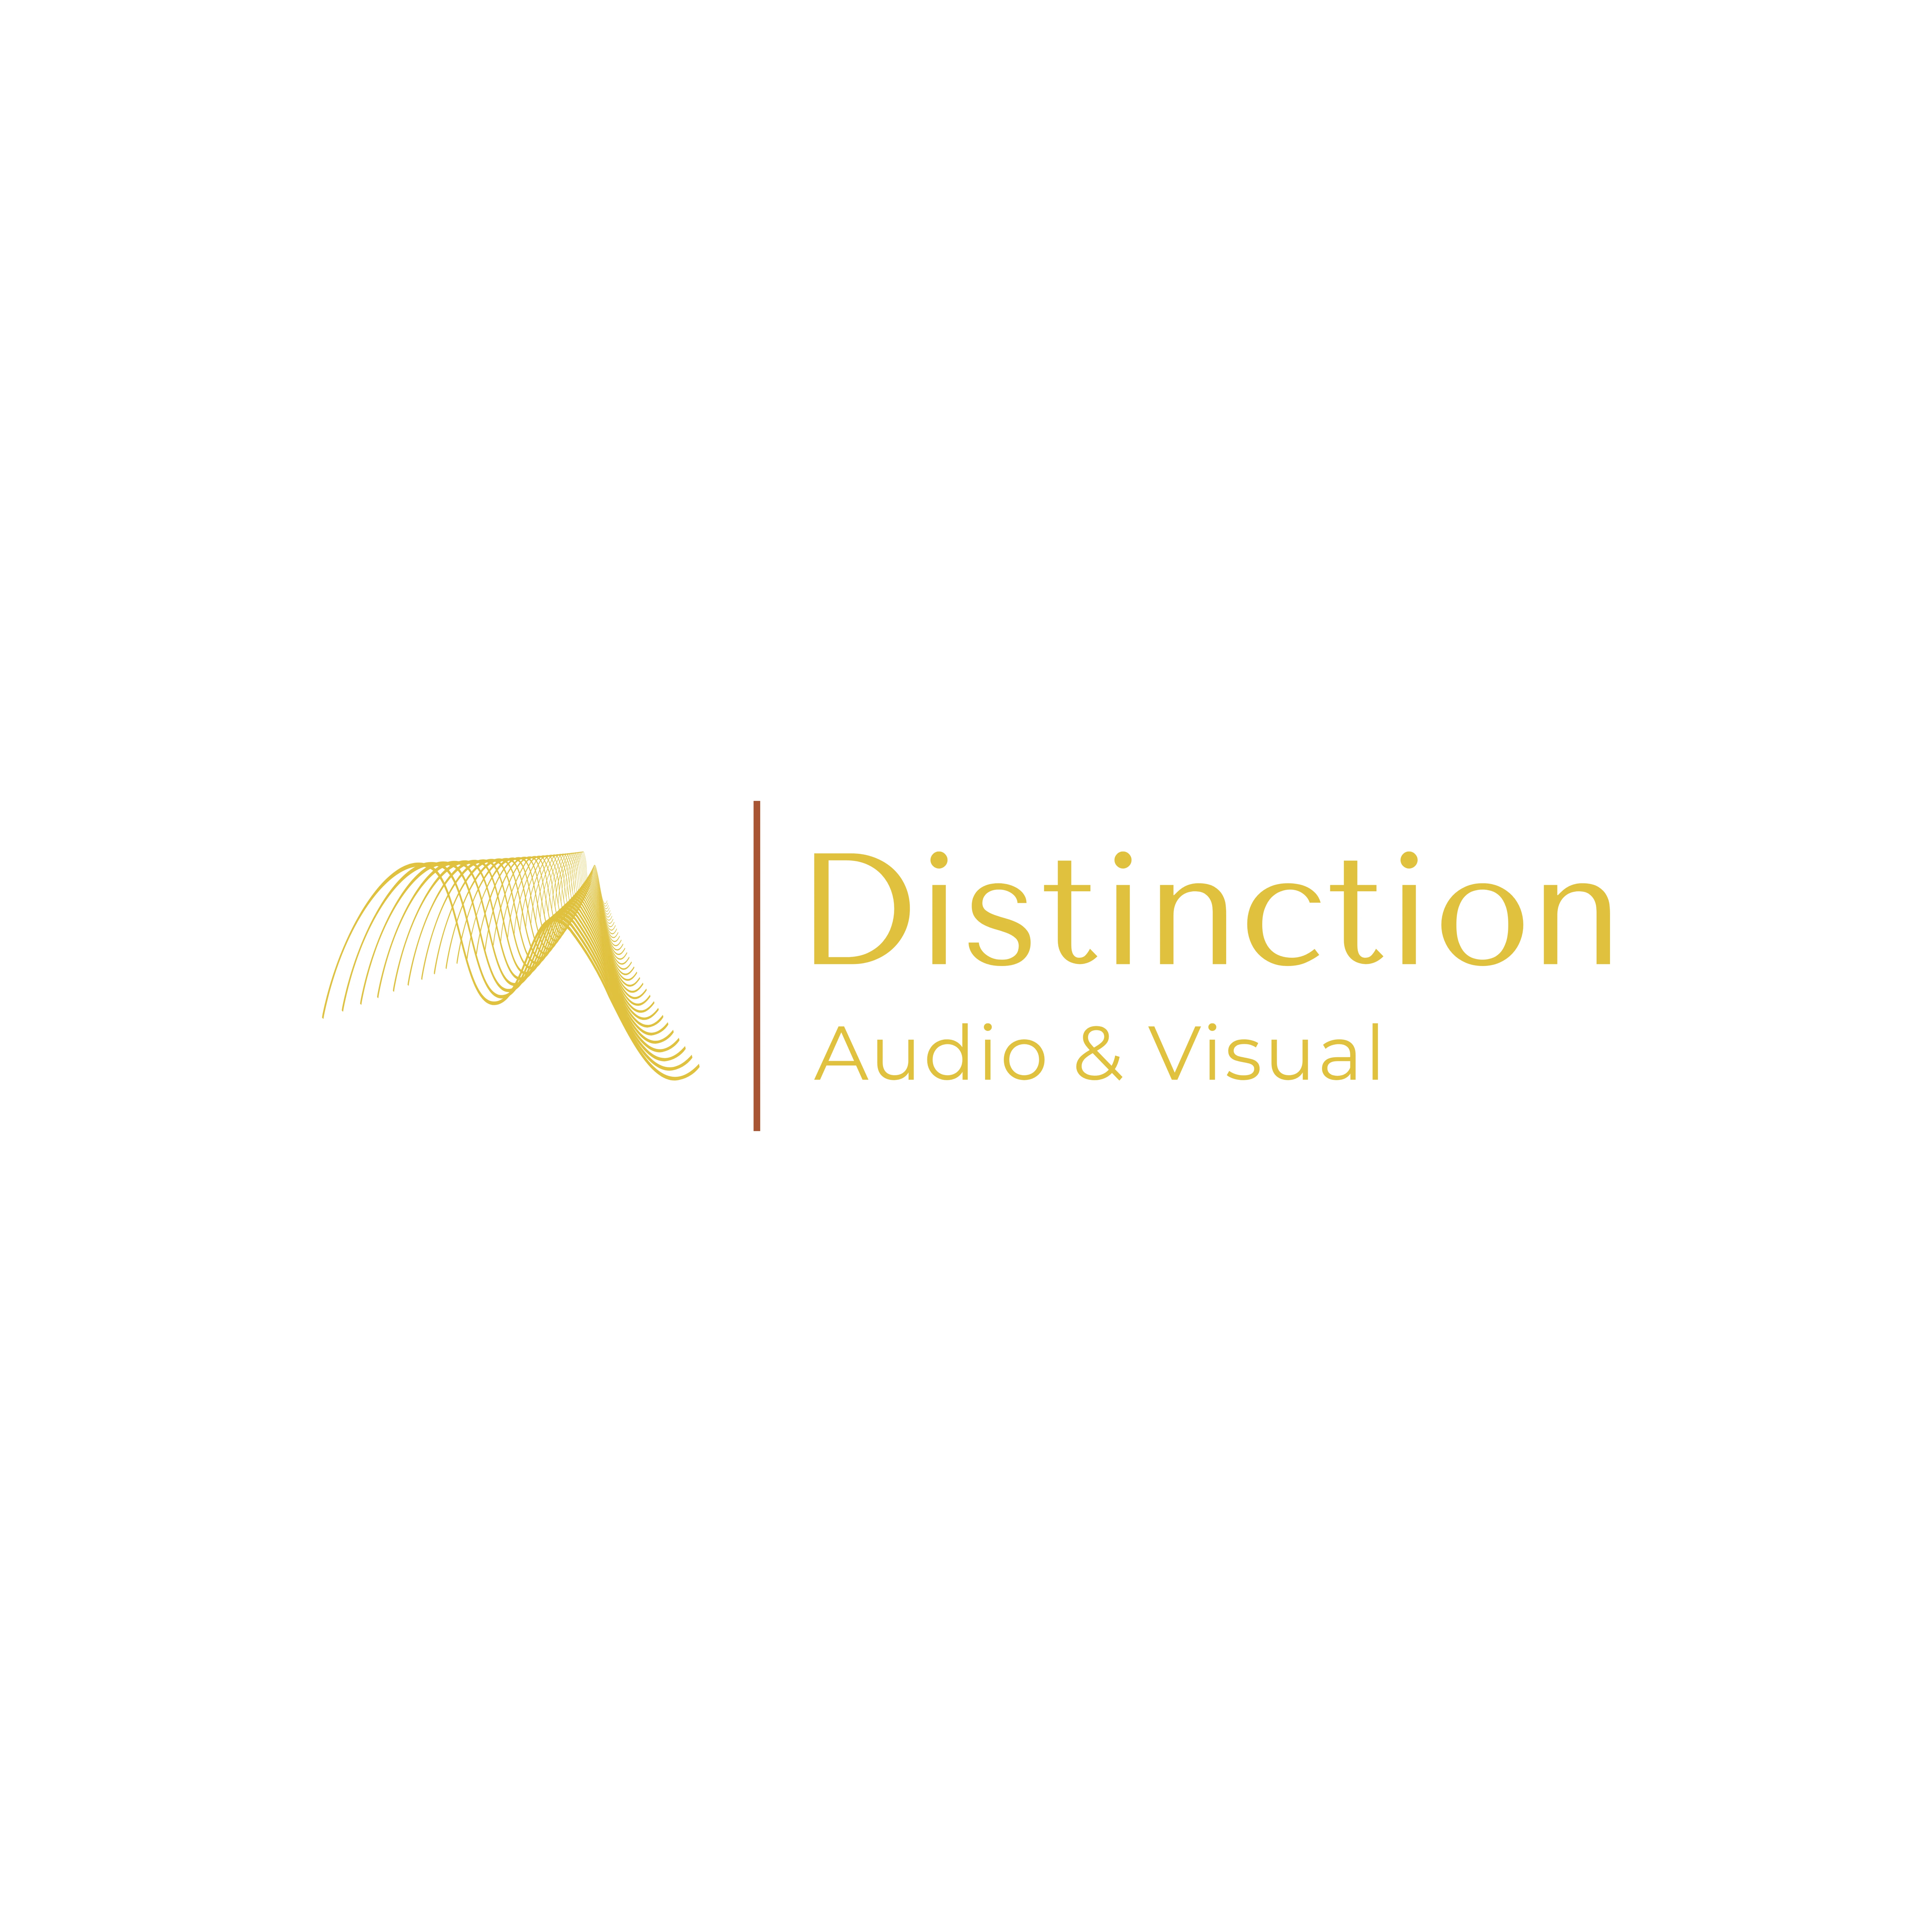 Distinction Audio